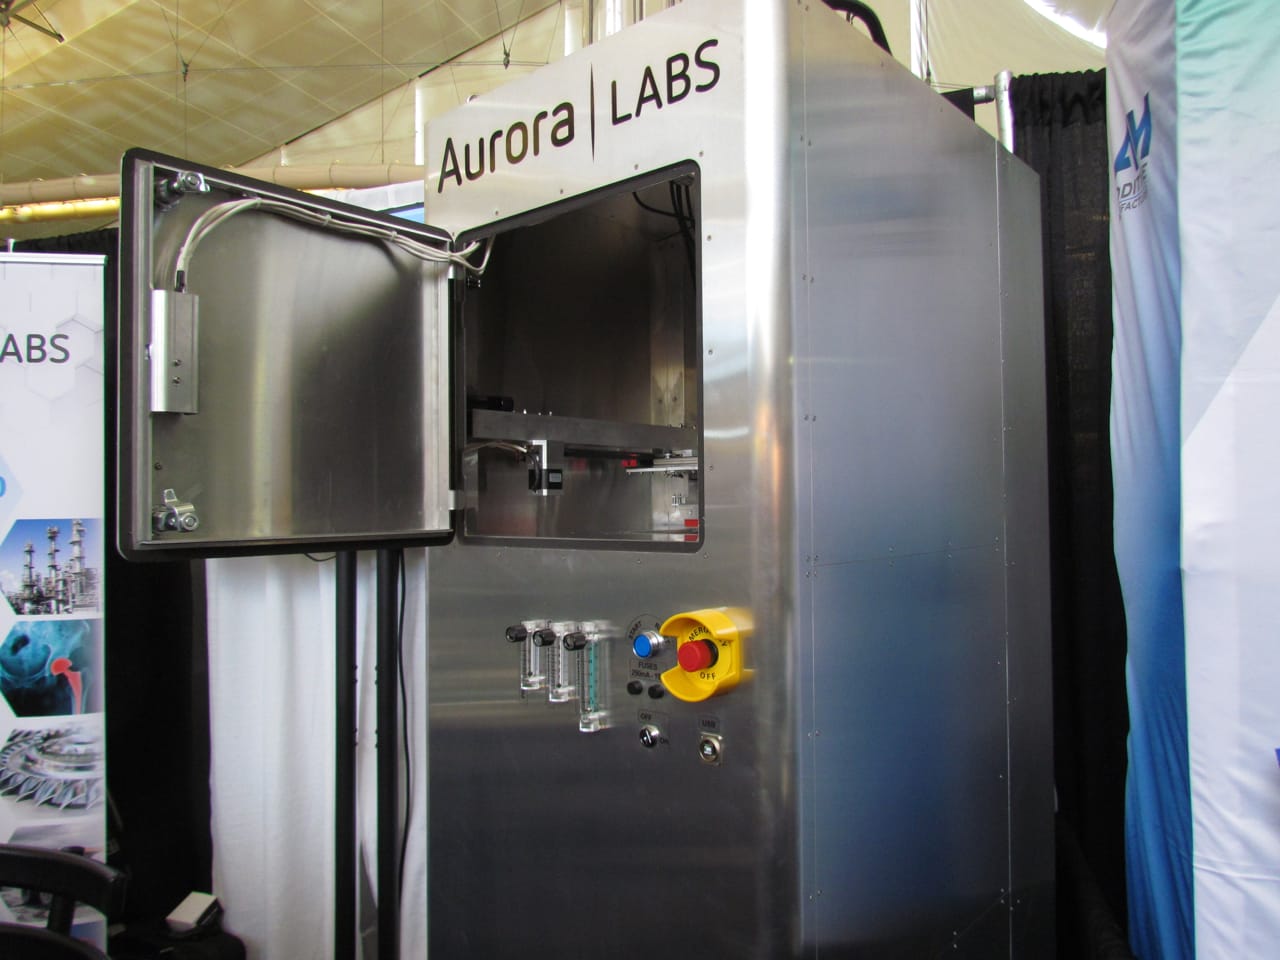  Aurora Lab's new 3D metal printer 